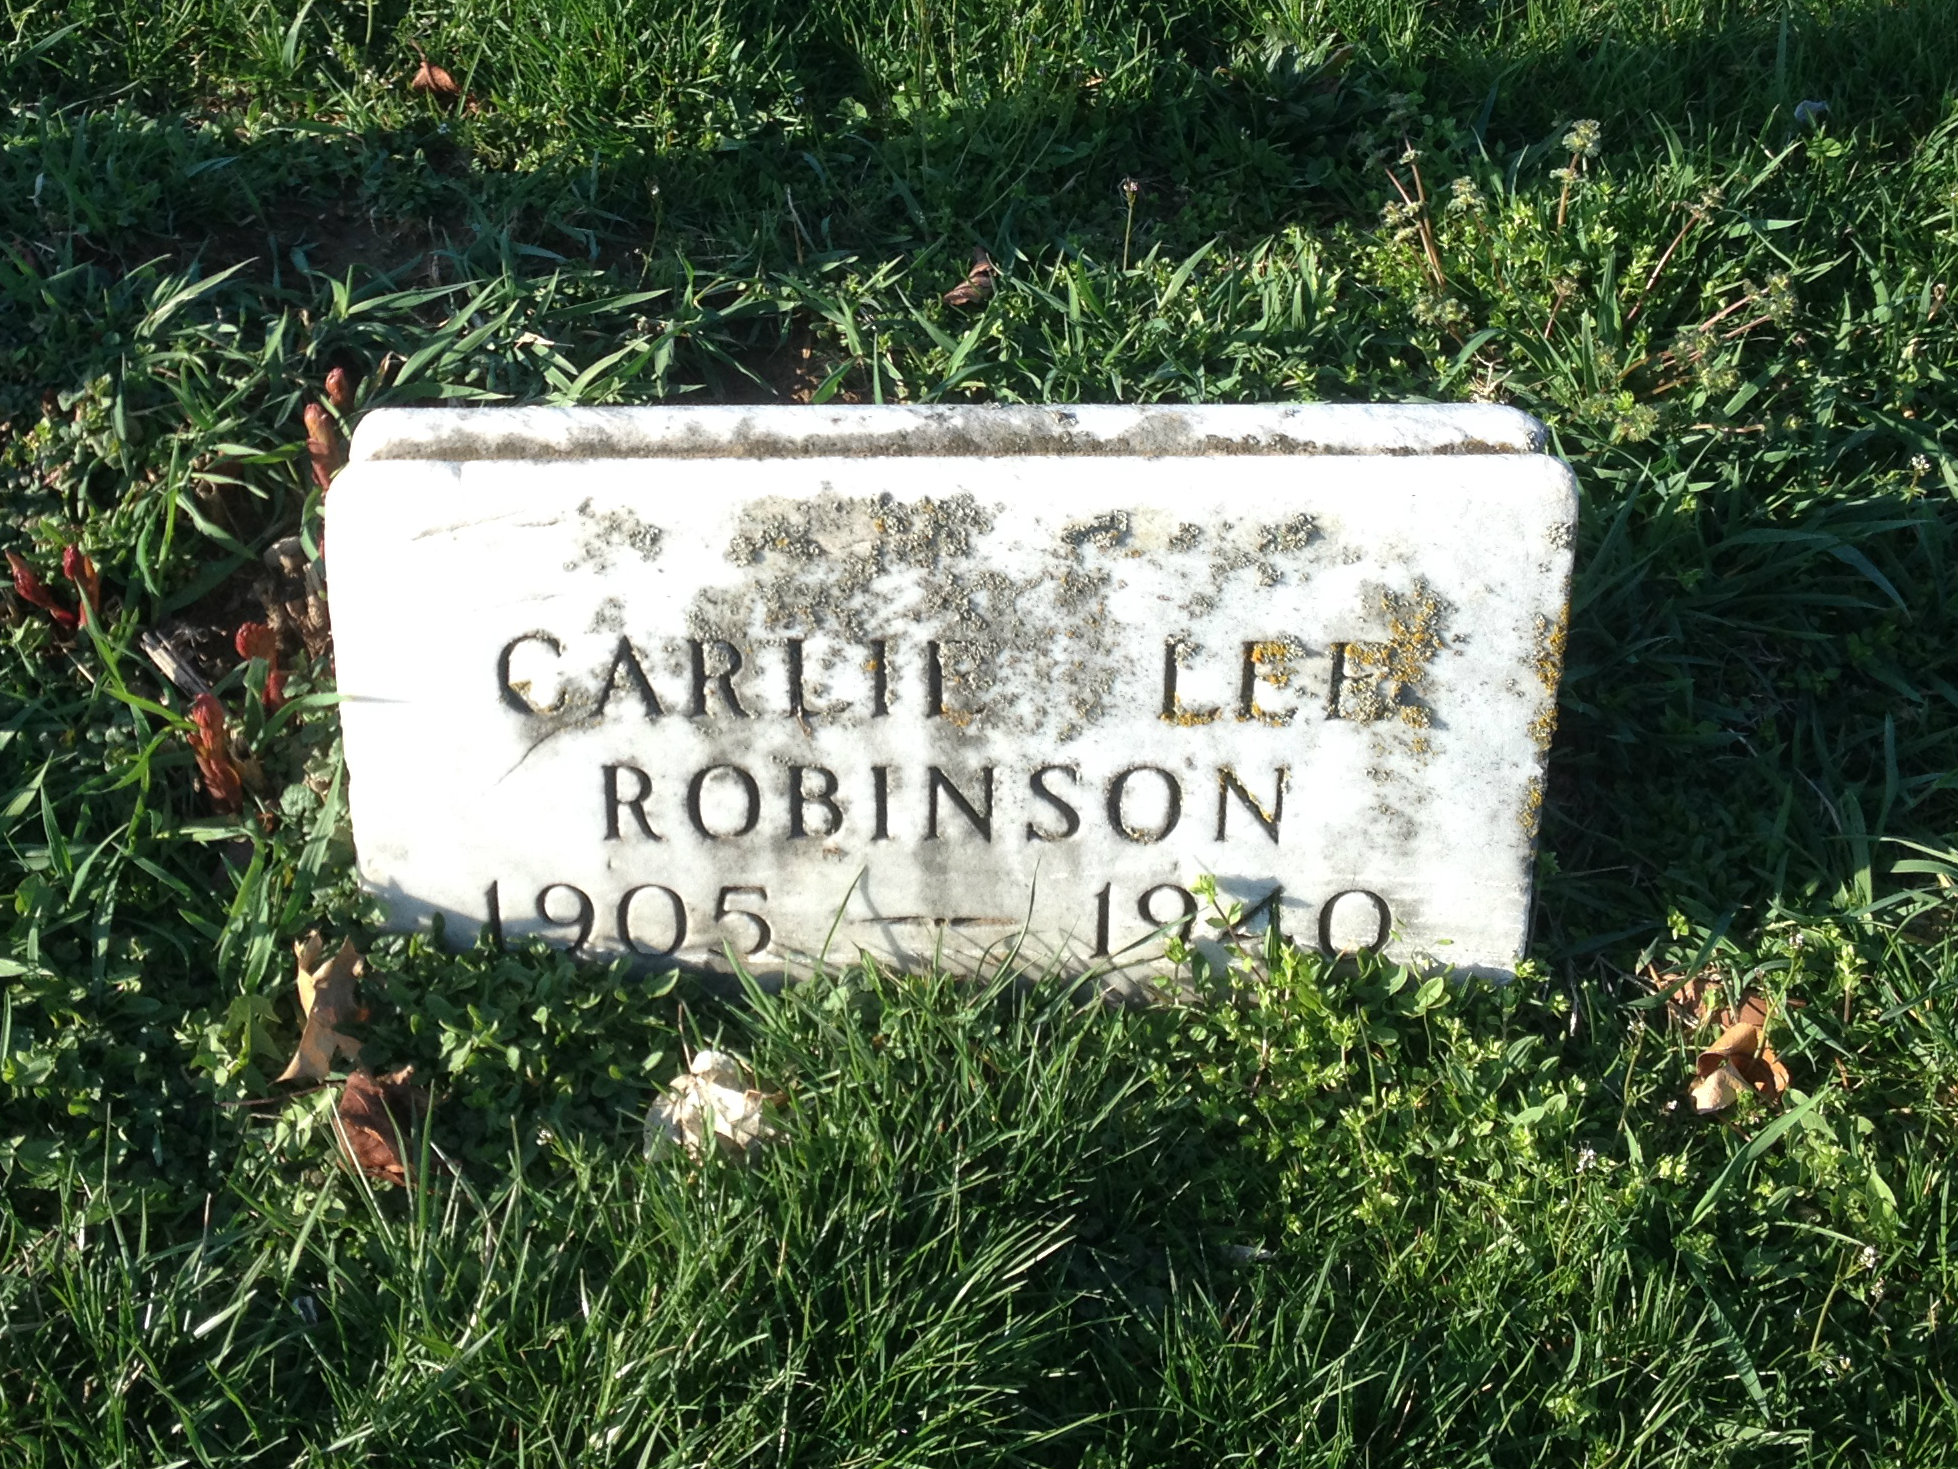 Carlie Lee Robinson (1905-1940)